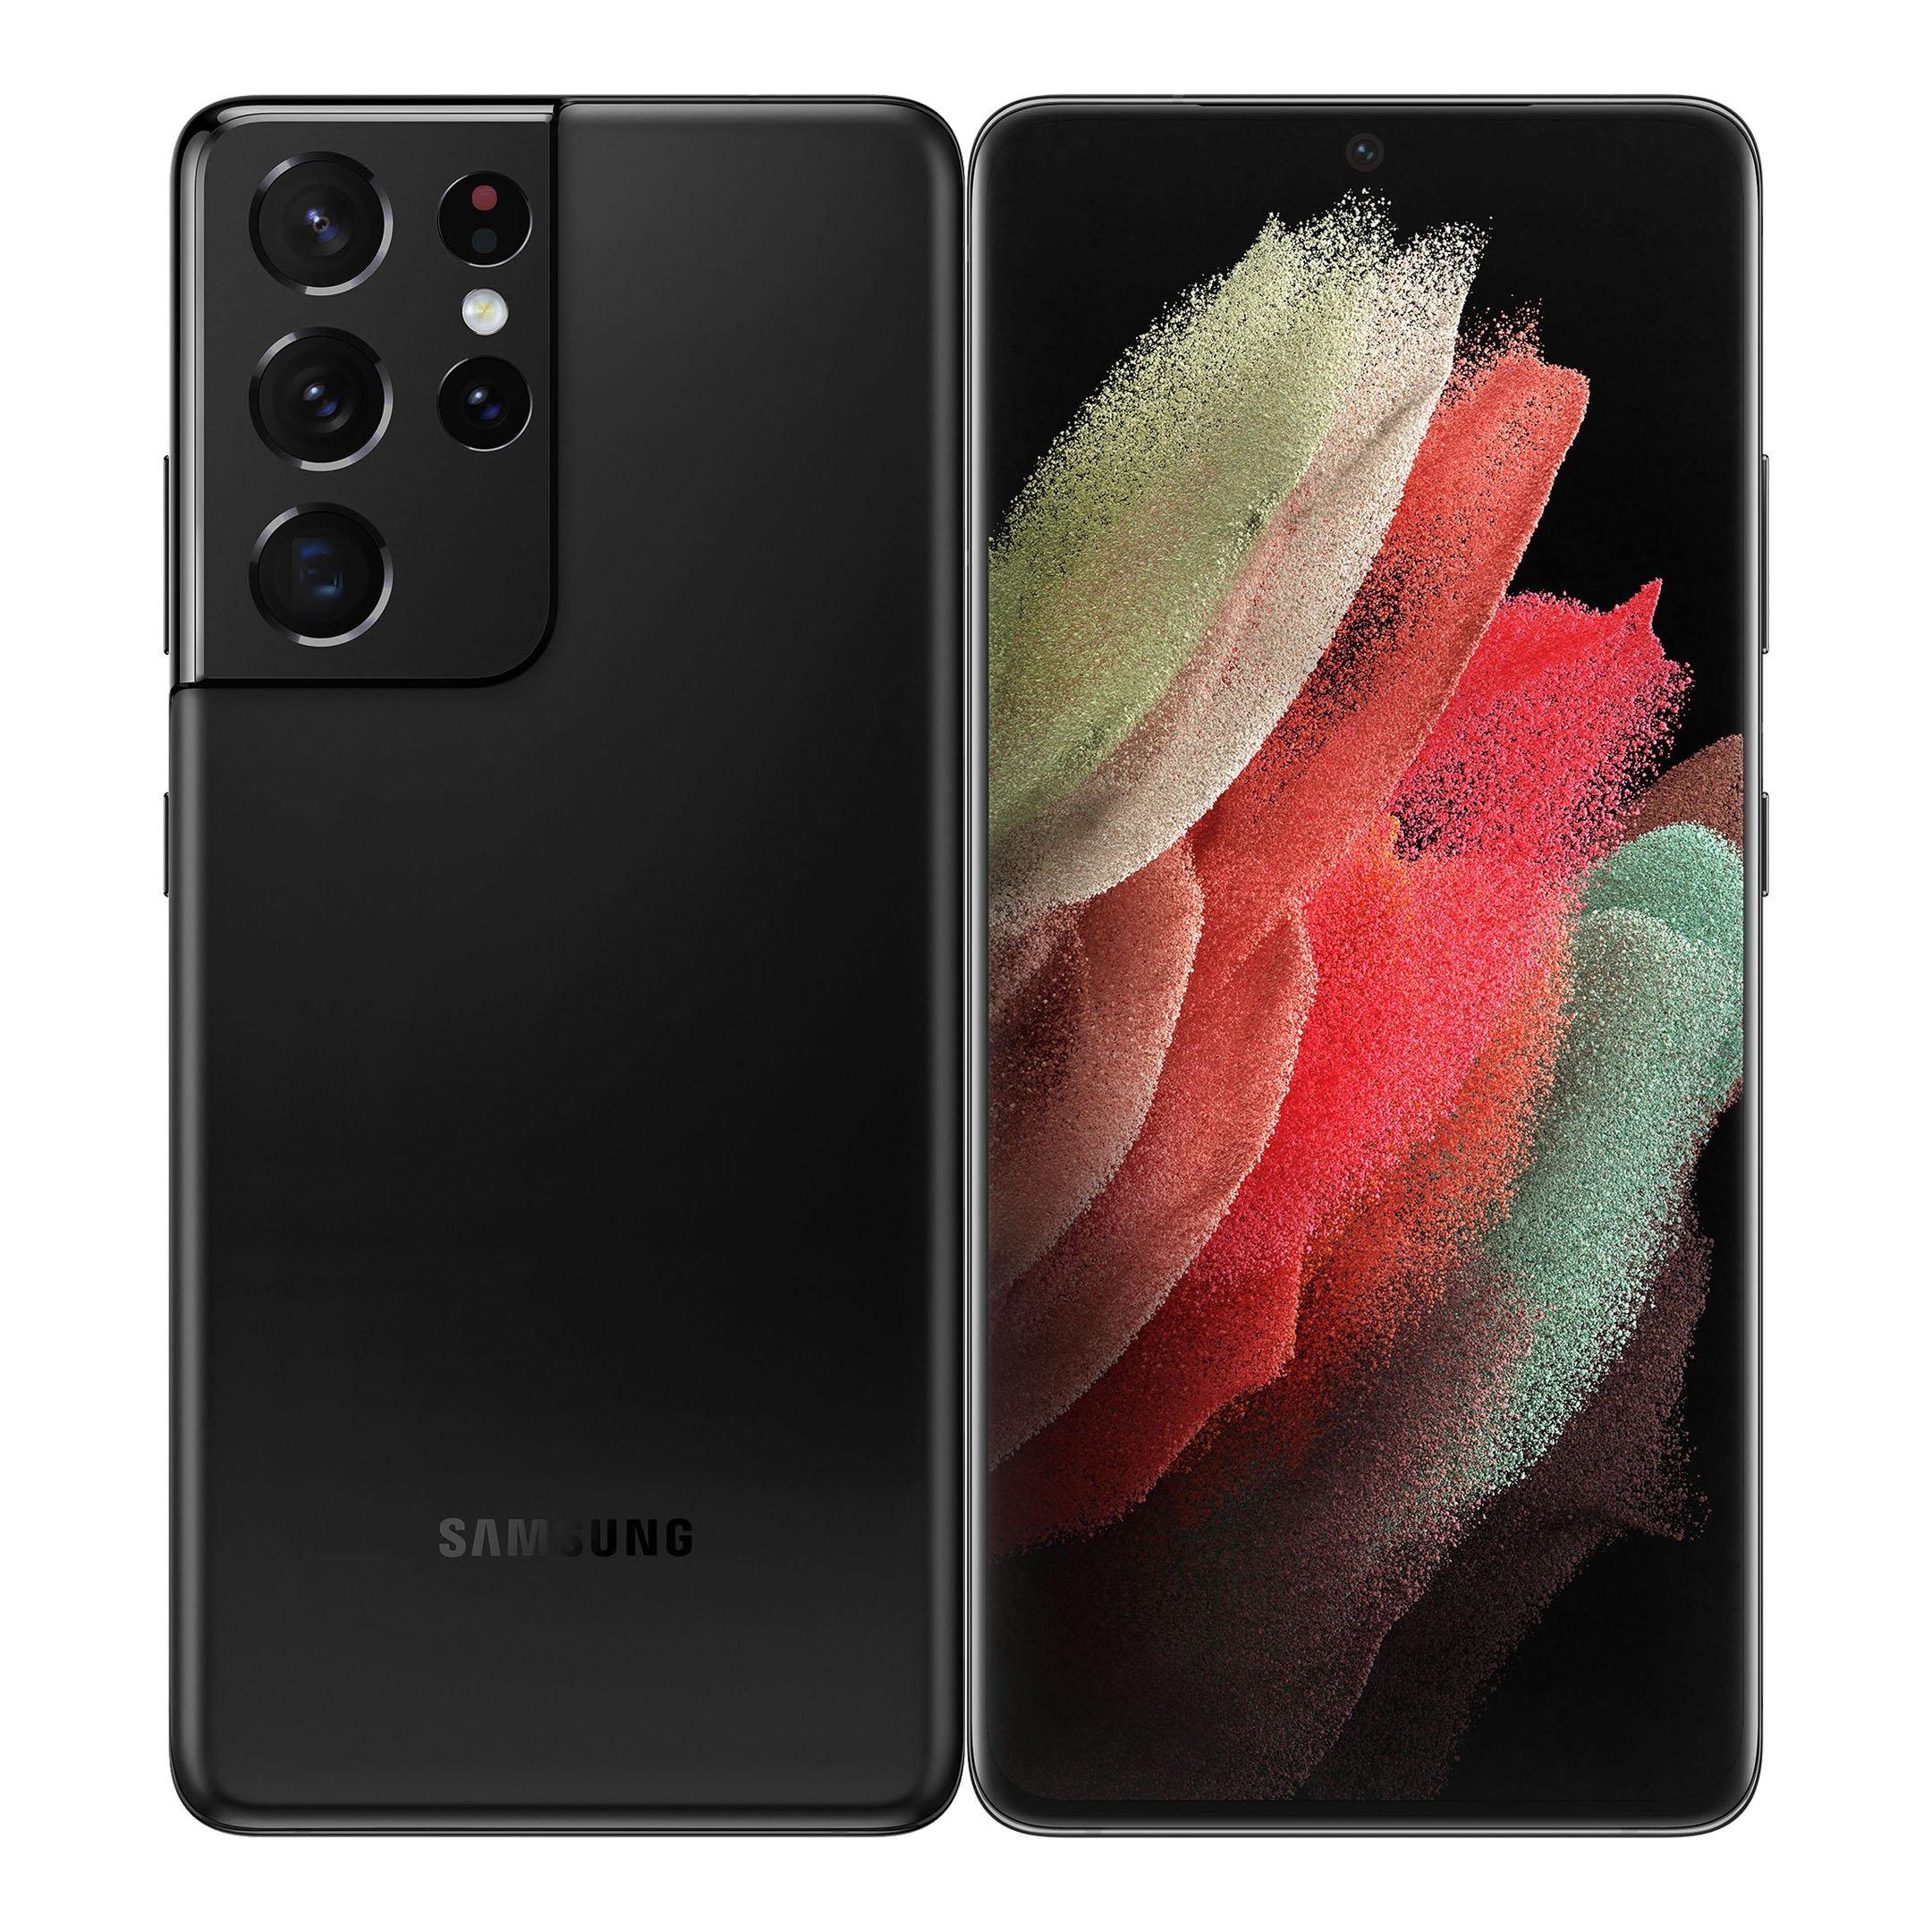 Samsung Galaxy S21 Ultra 5G 256GBPhantom Black?locale=en GB,en *,*